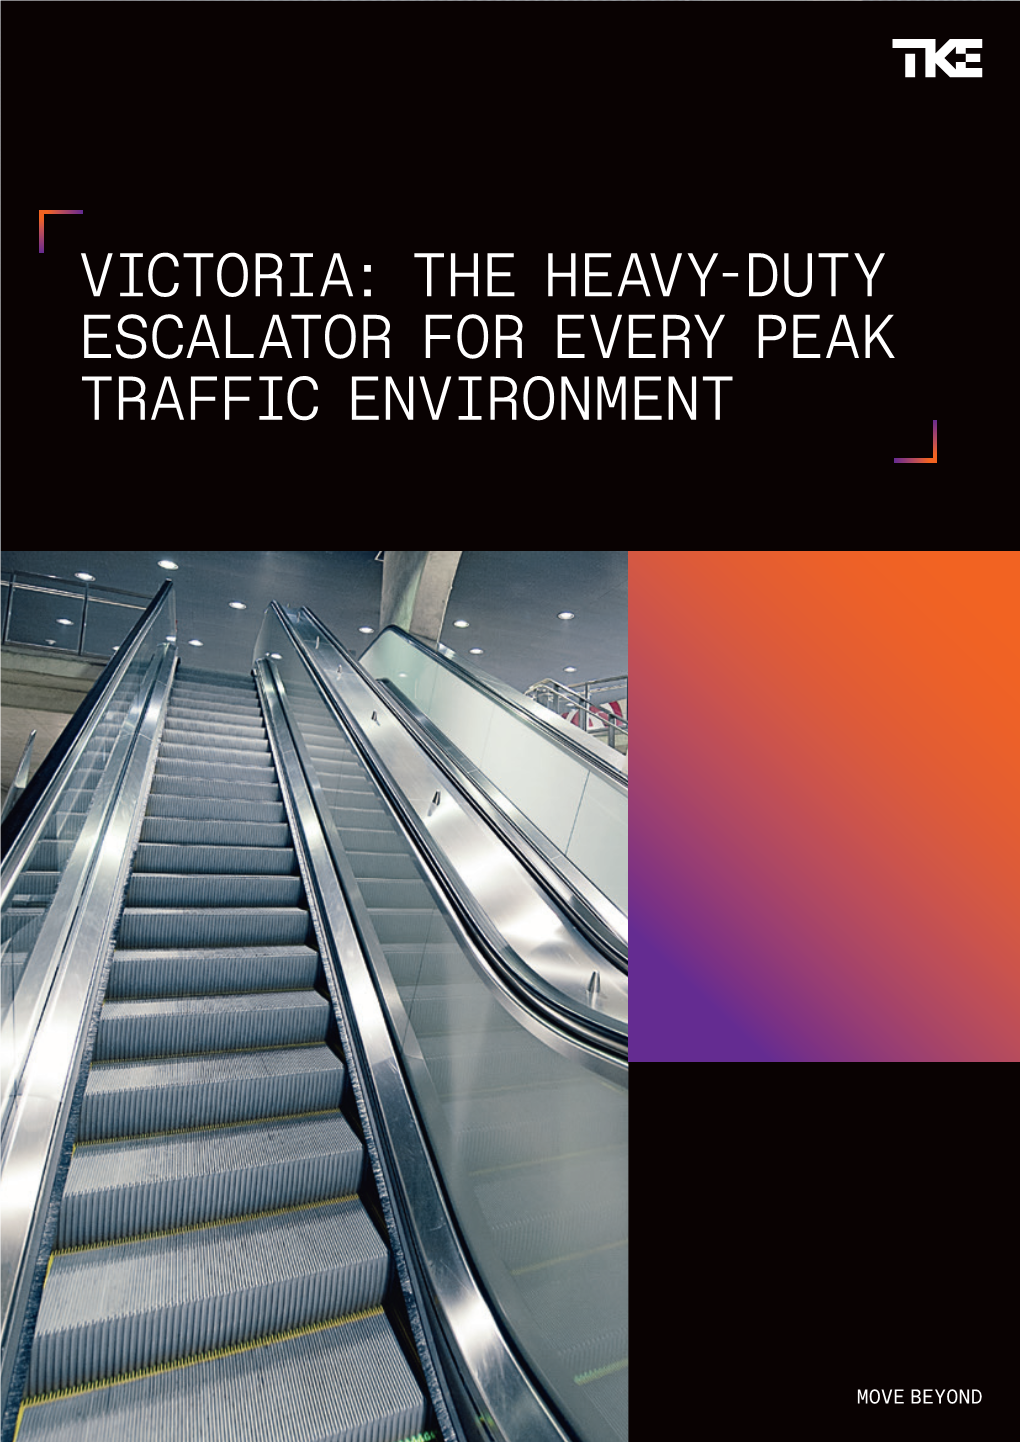 The Heavy-Duty Escalator for Every Peak Traffic Environment